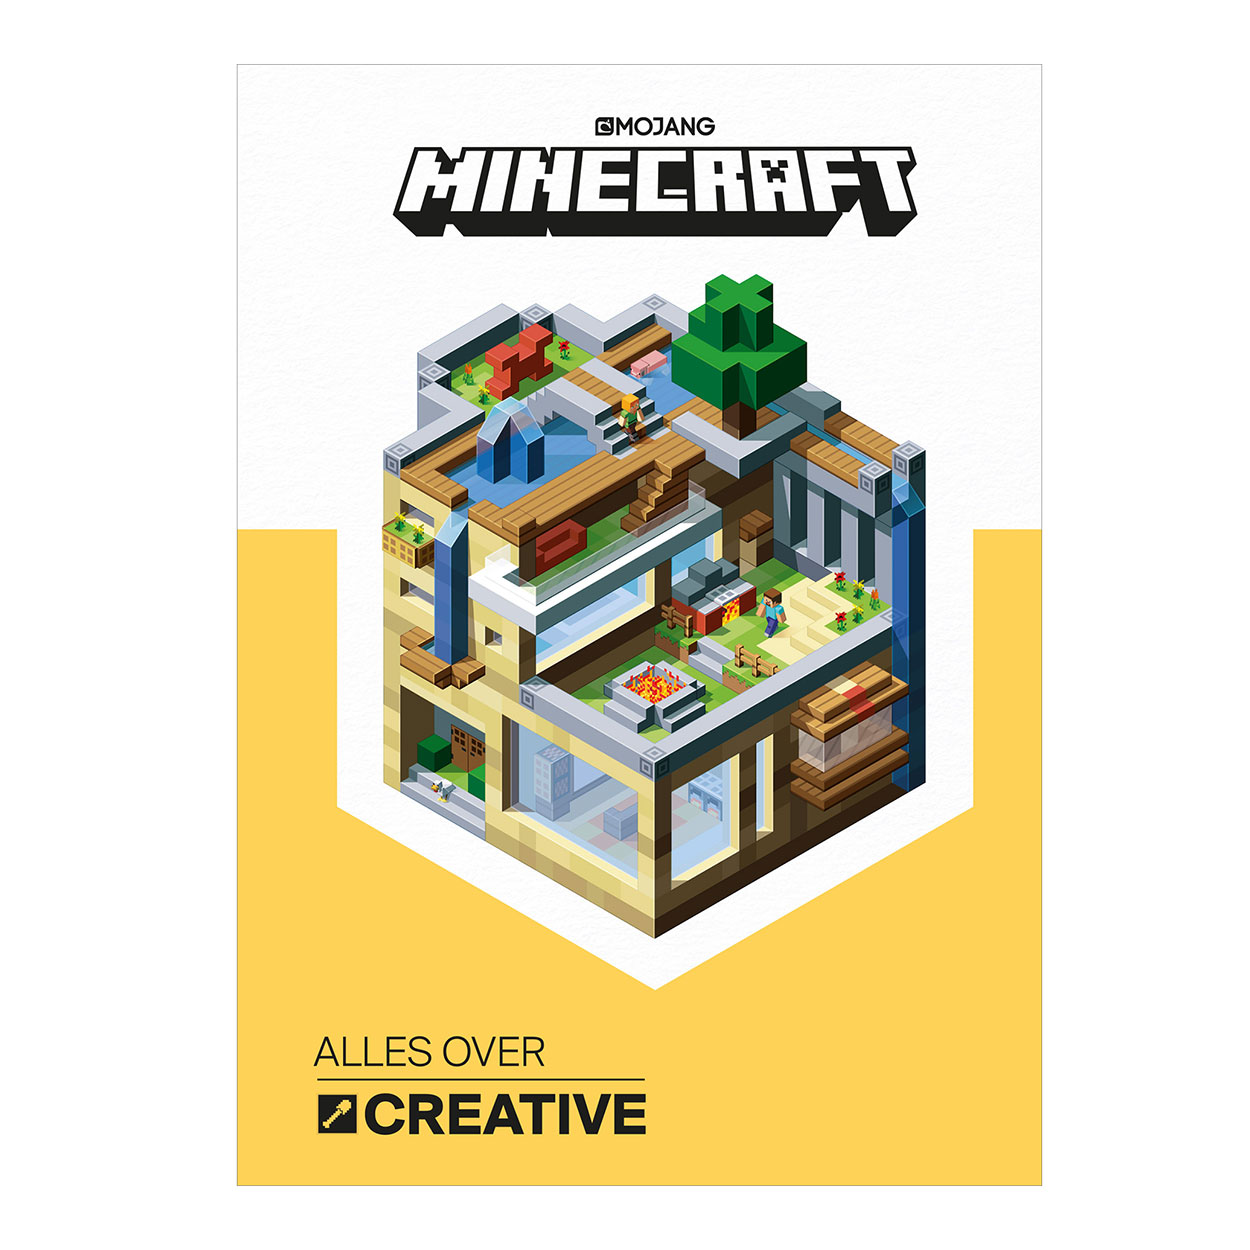 Minecraft: Alles over Creative